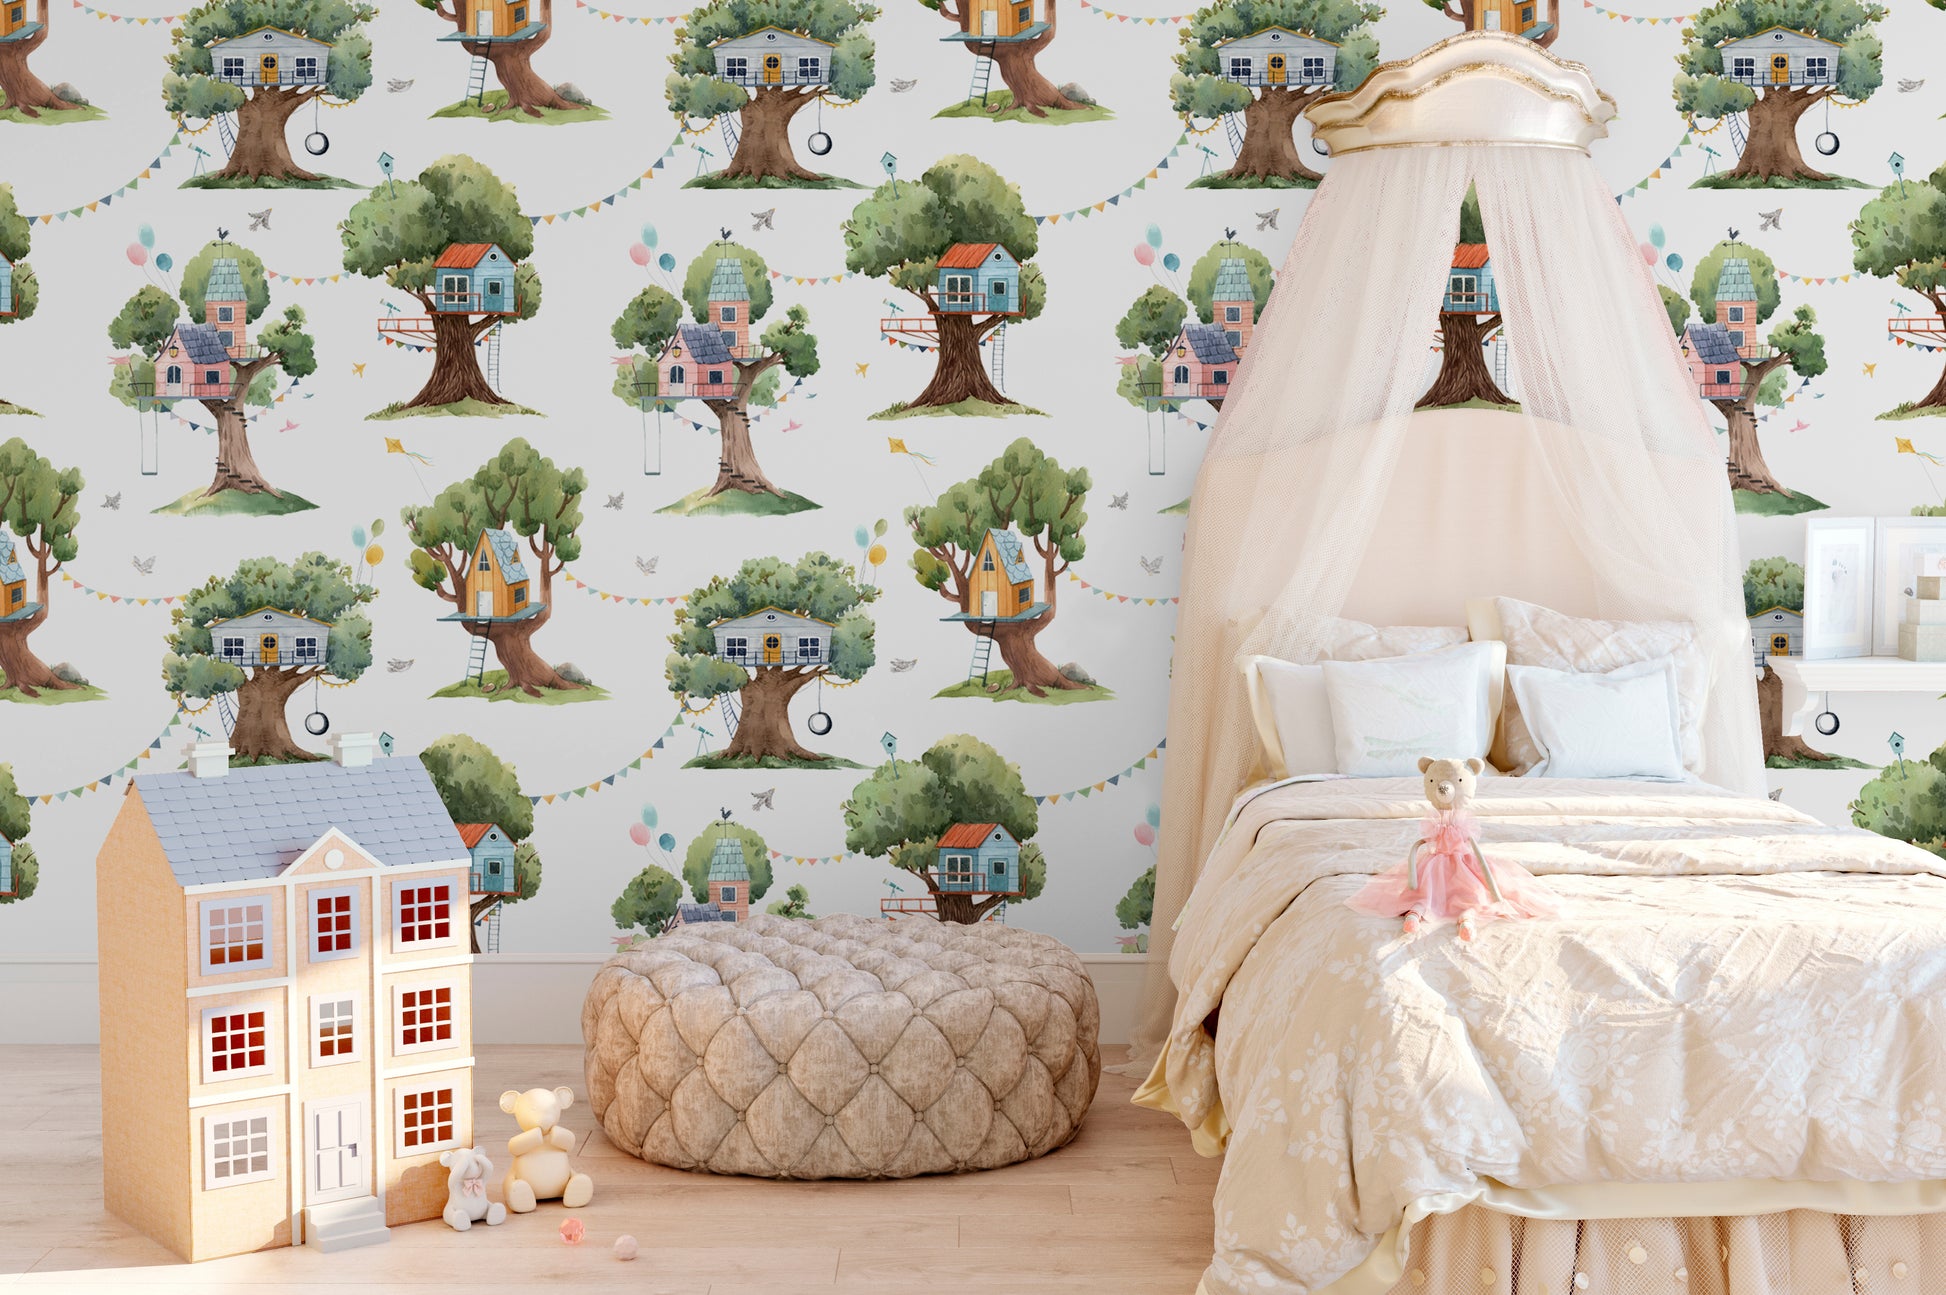 Treehouse wallpaper in girls bedroom